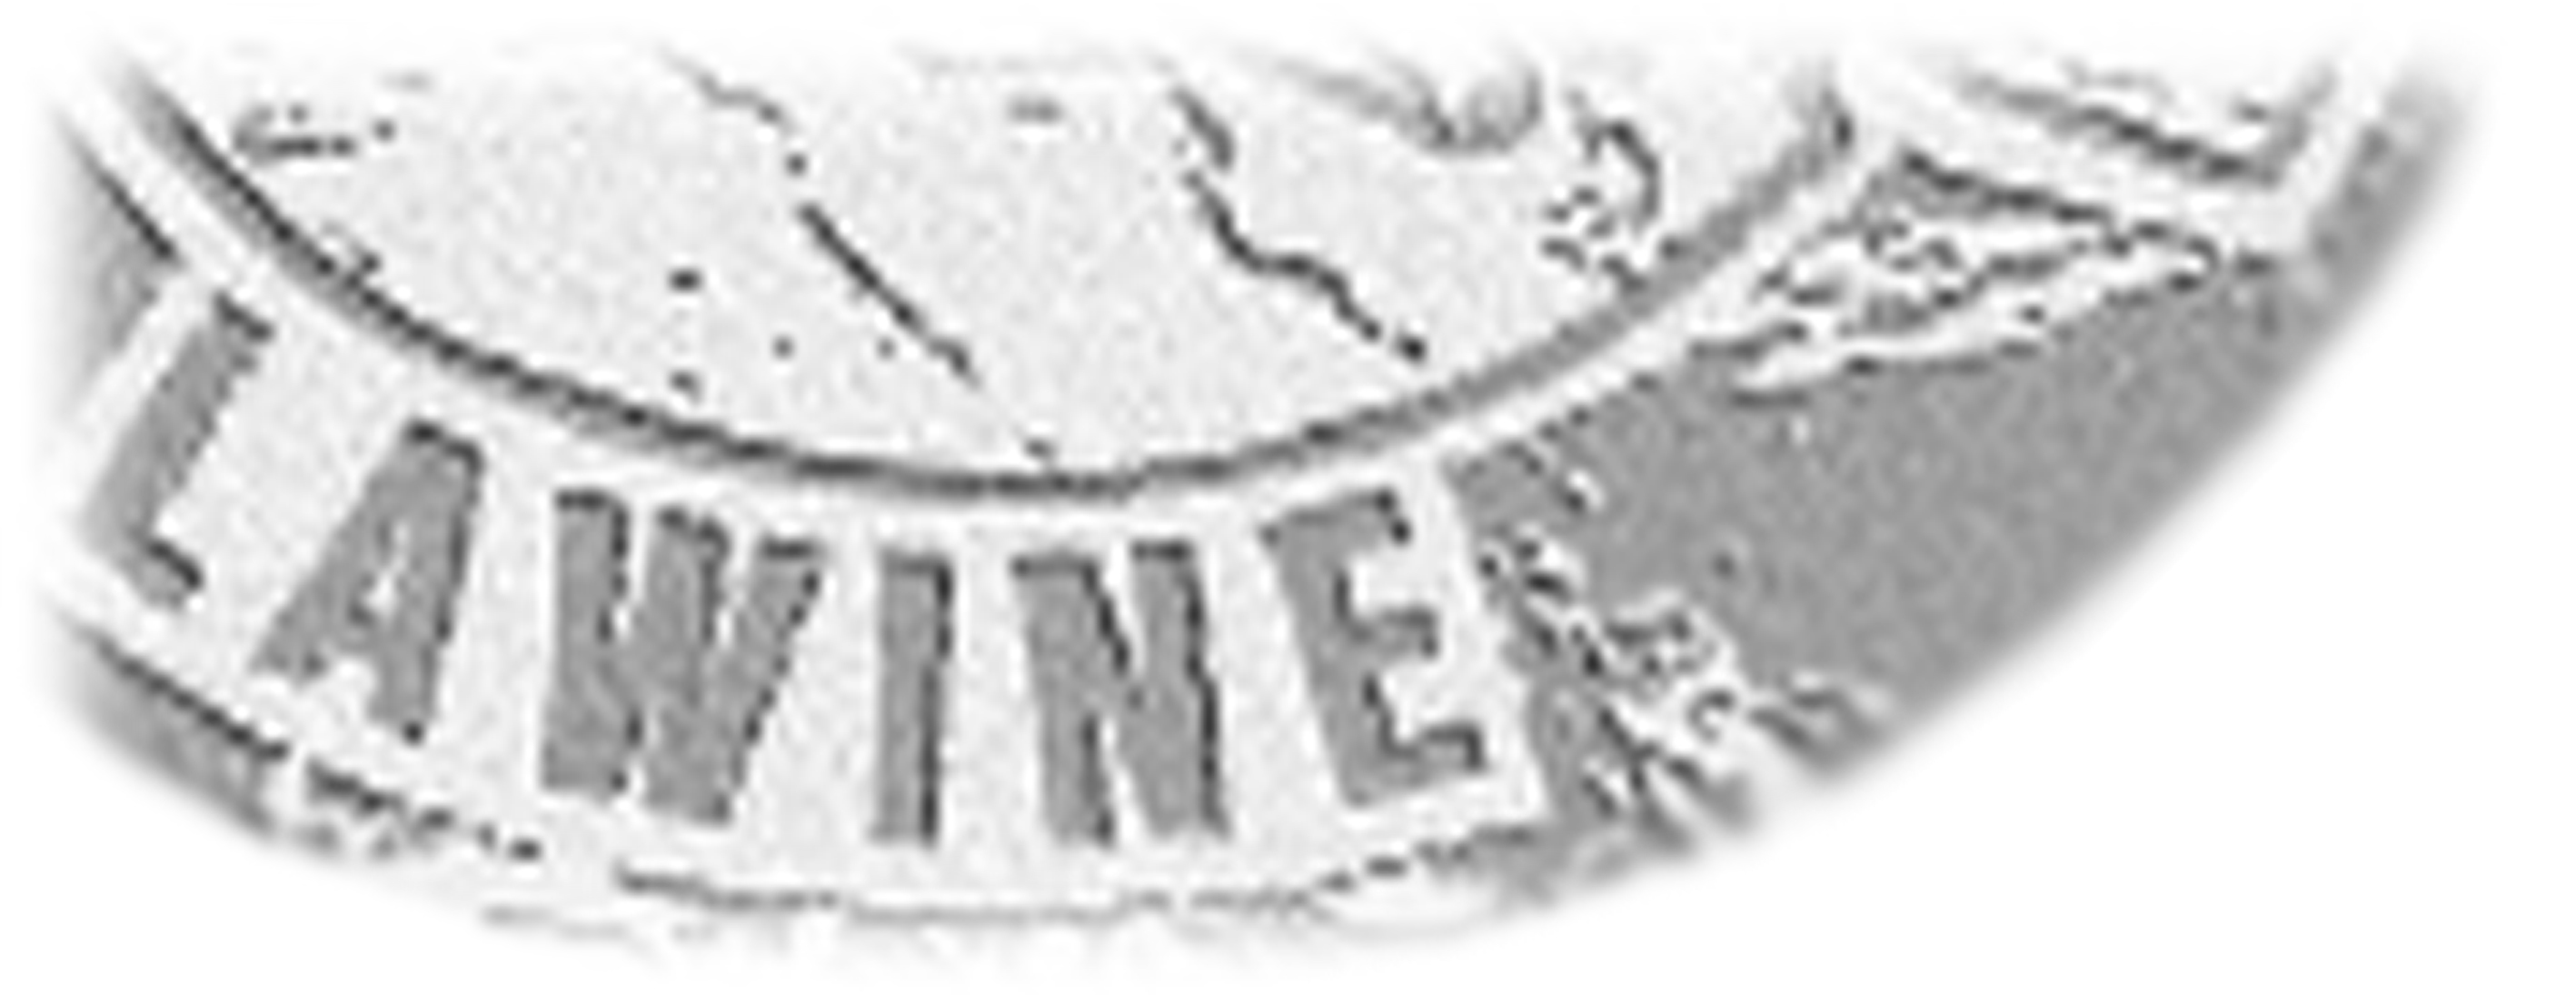 Stichting Lawine logo